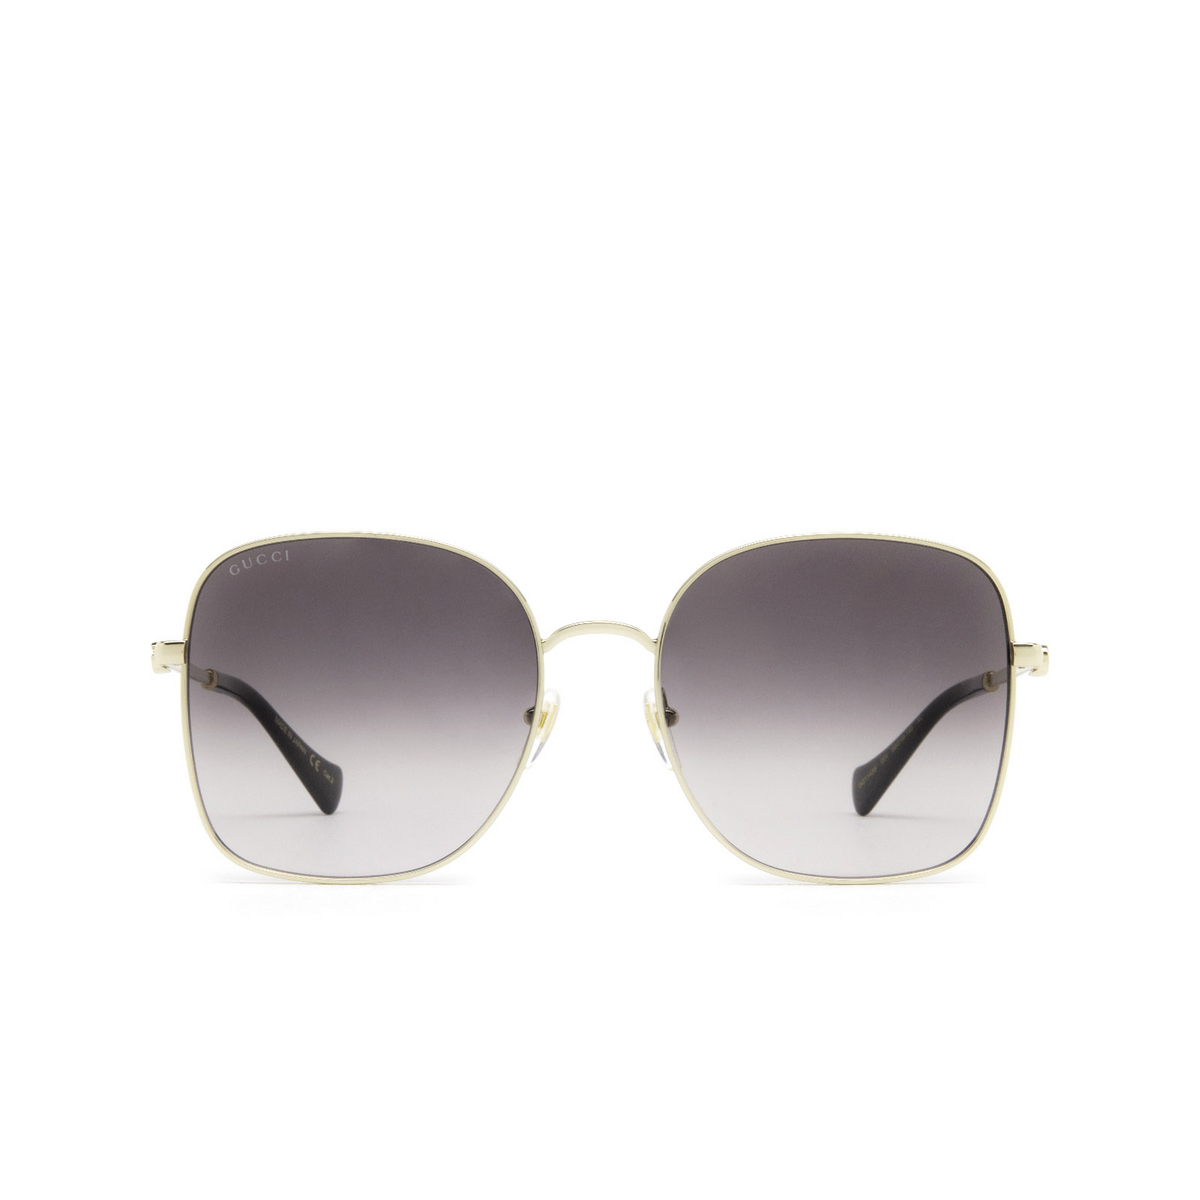 Gucci® Square Sunglasses: GG1143S color 001 Gold - front view